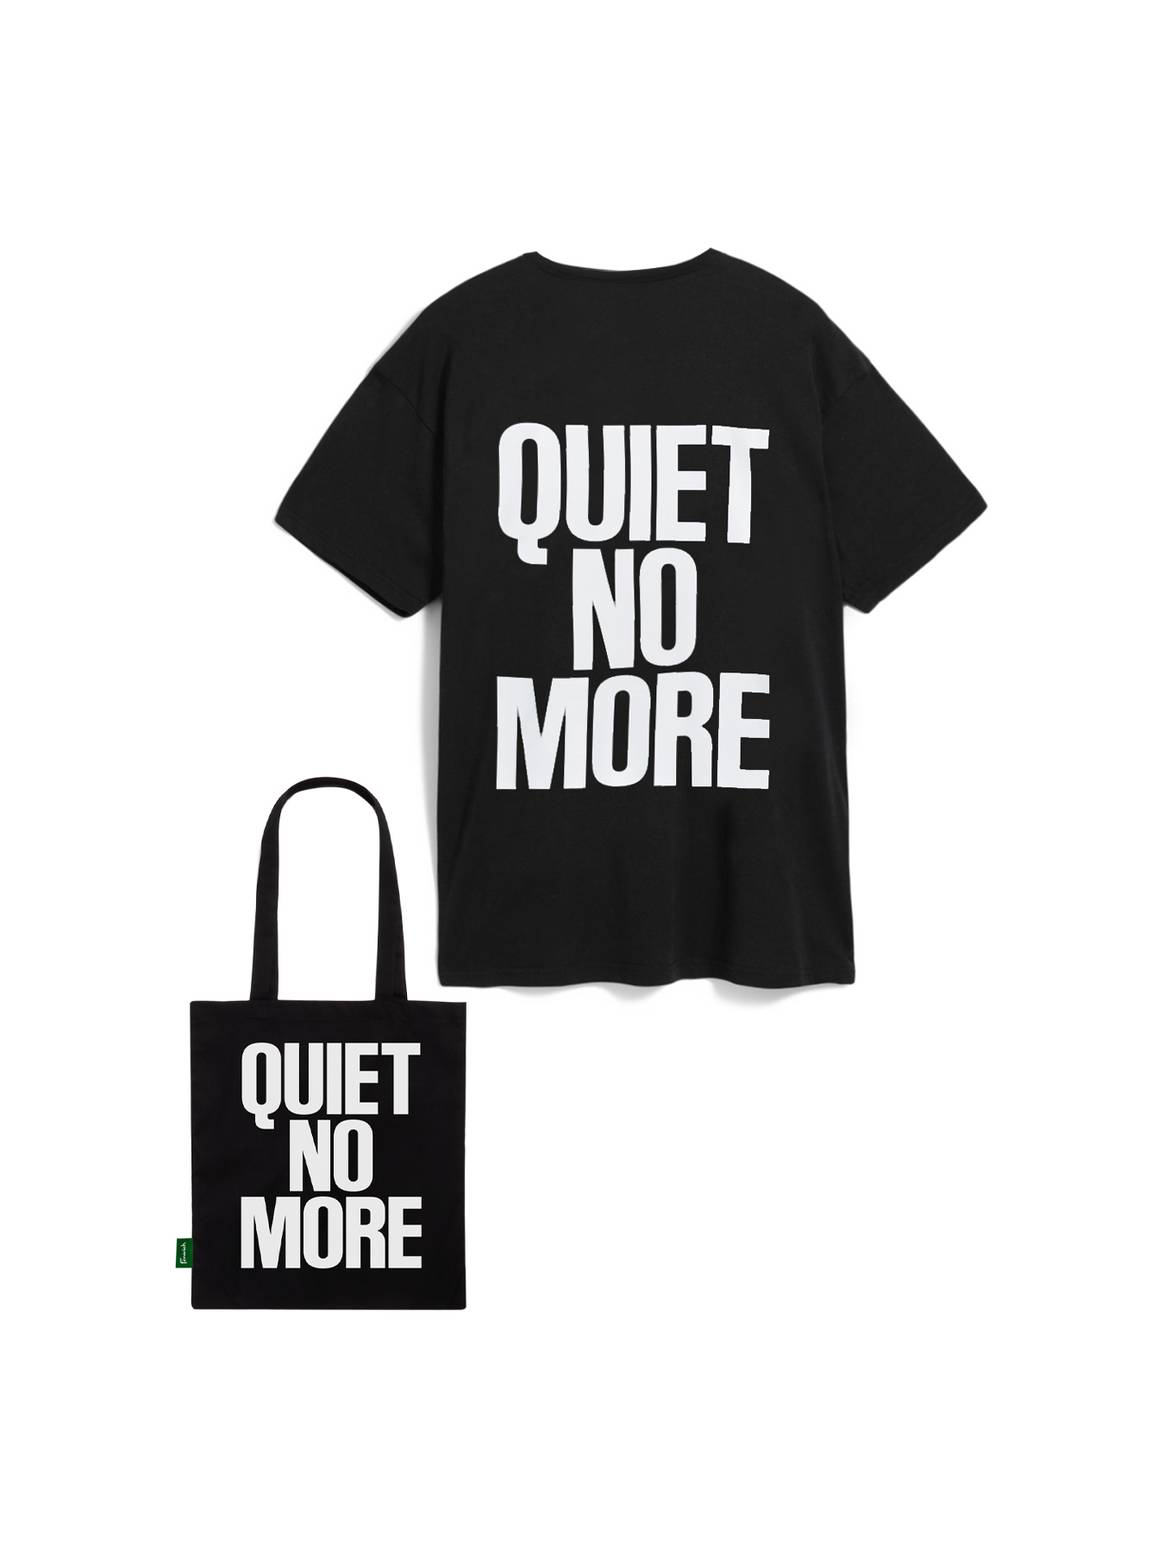 Fenwick ‘Quiet No More’ T-shirt and tote bag